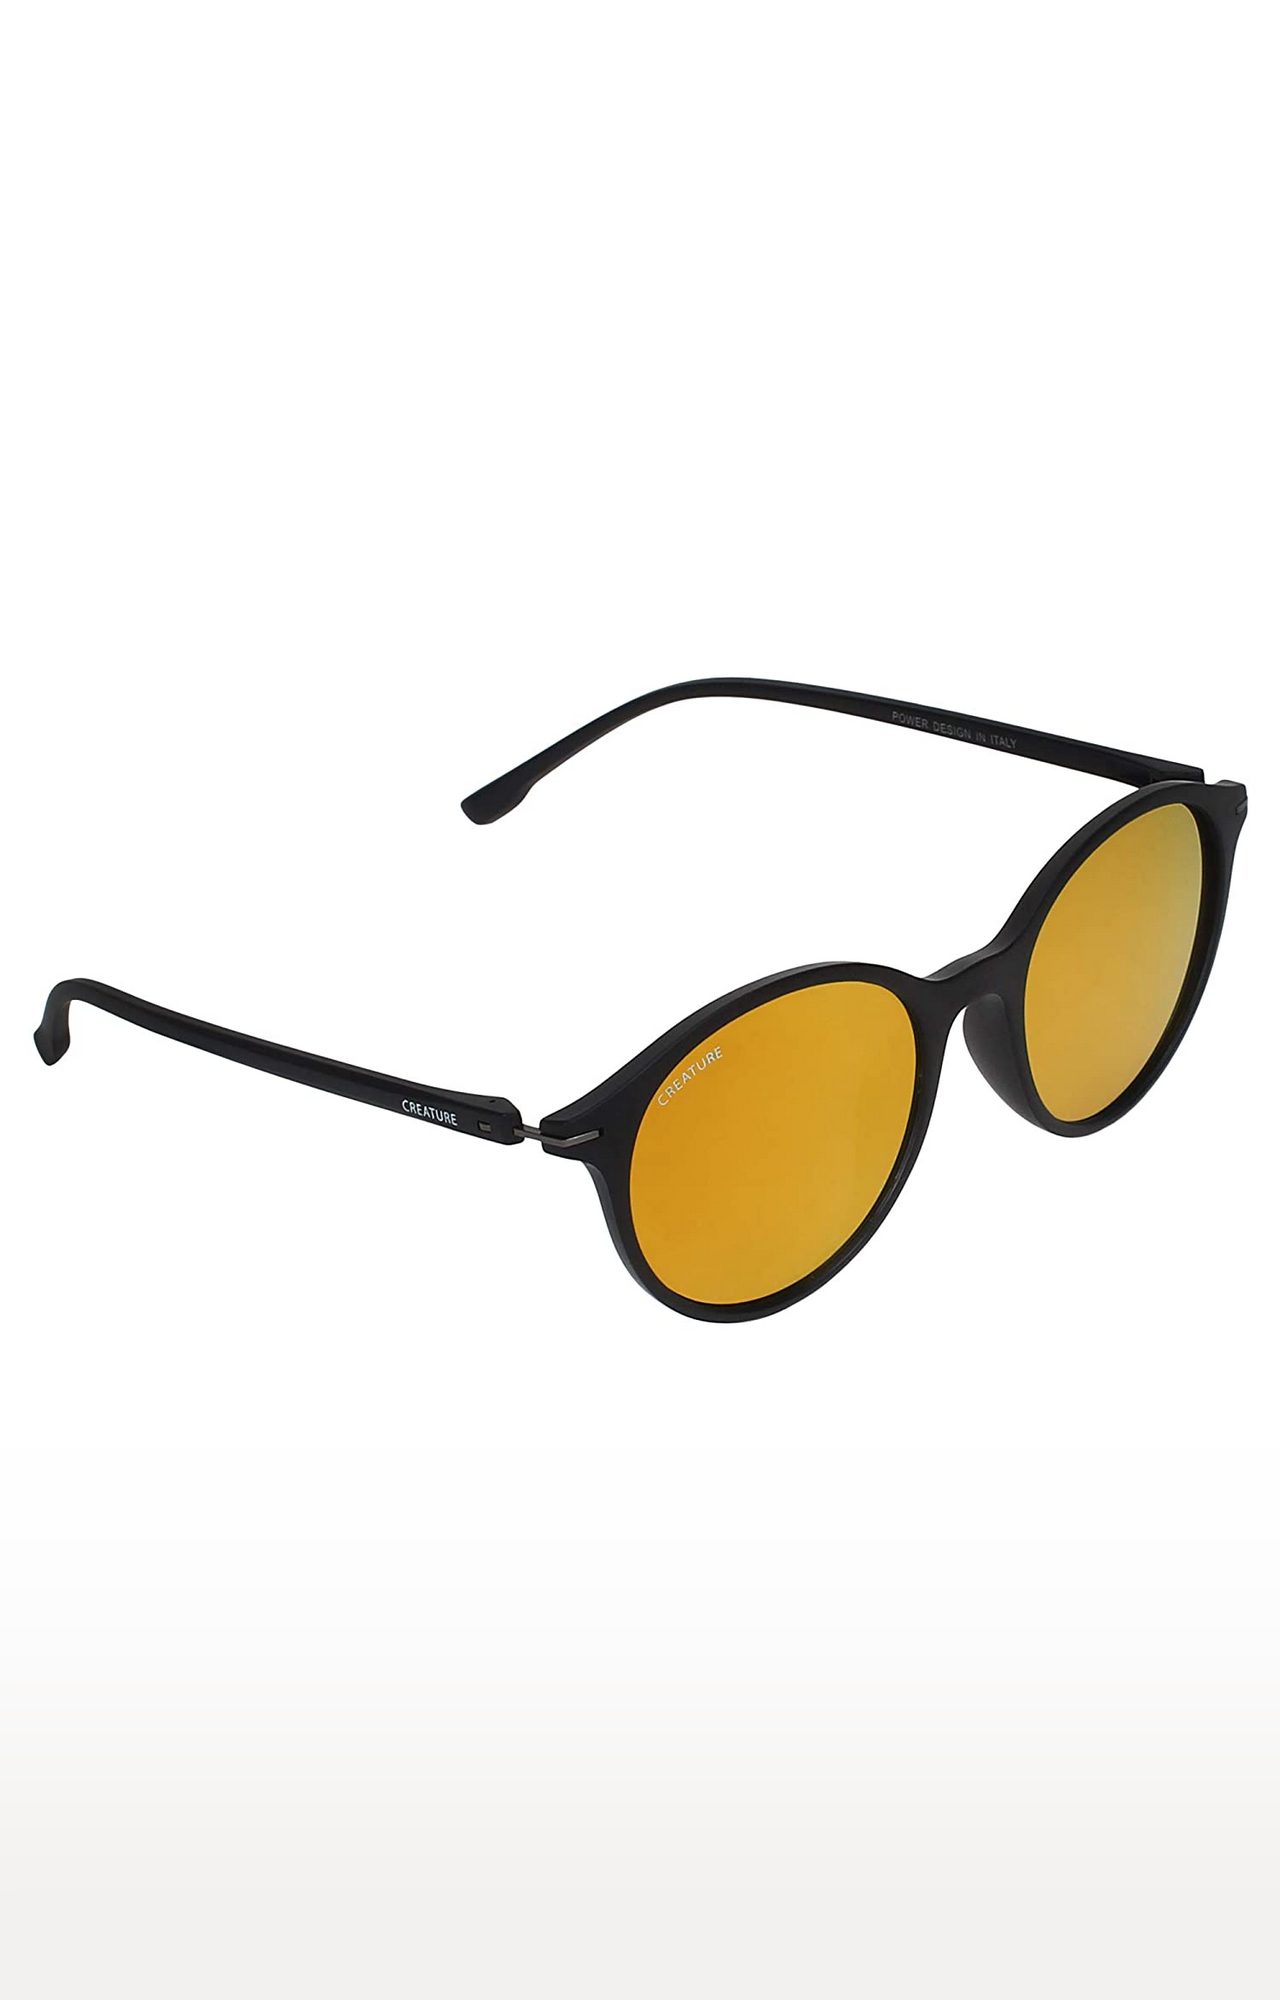 CREATURE | CREATURE Matt Finish Club Master Round UV Protected Unisex Sunglasses (Lens-Yellow|Frame-Black)